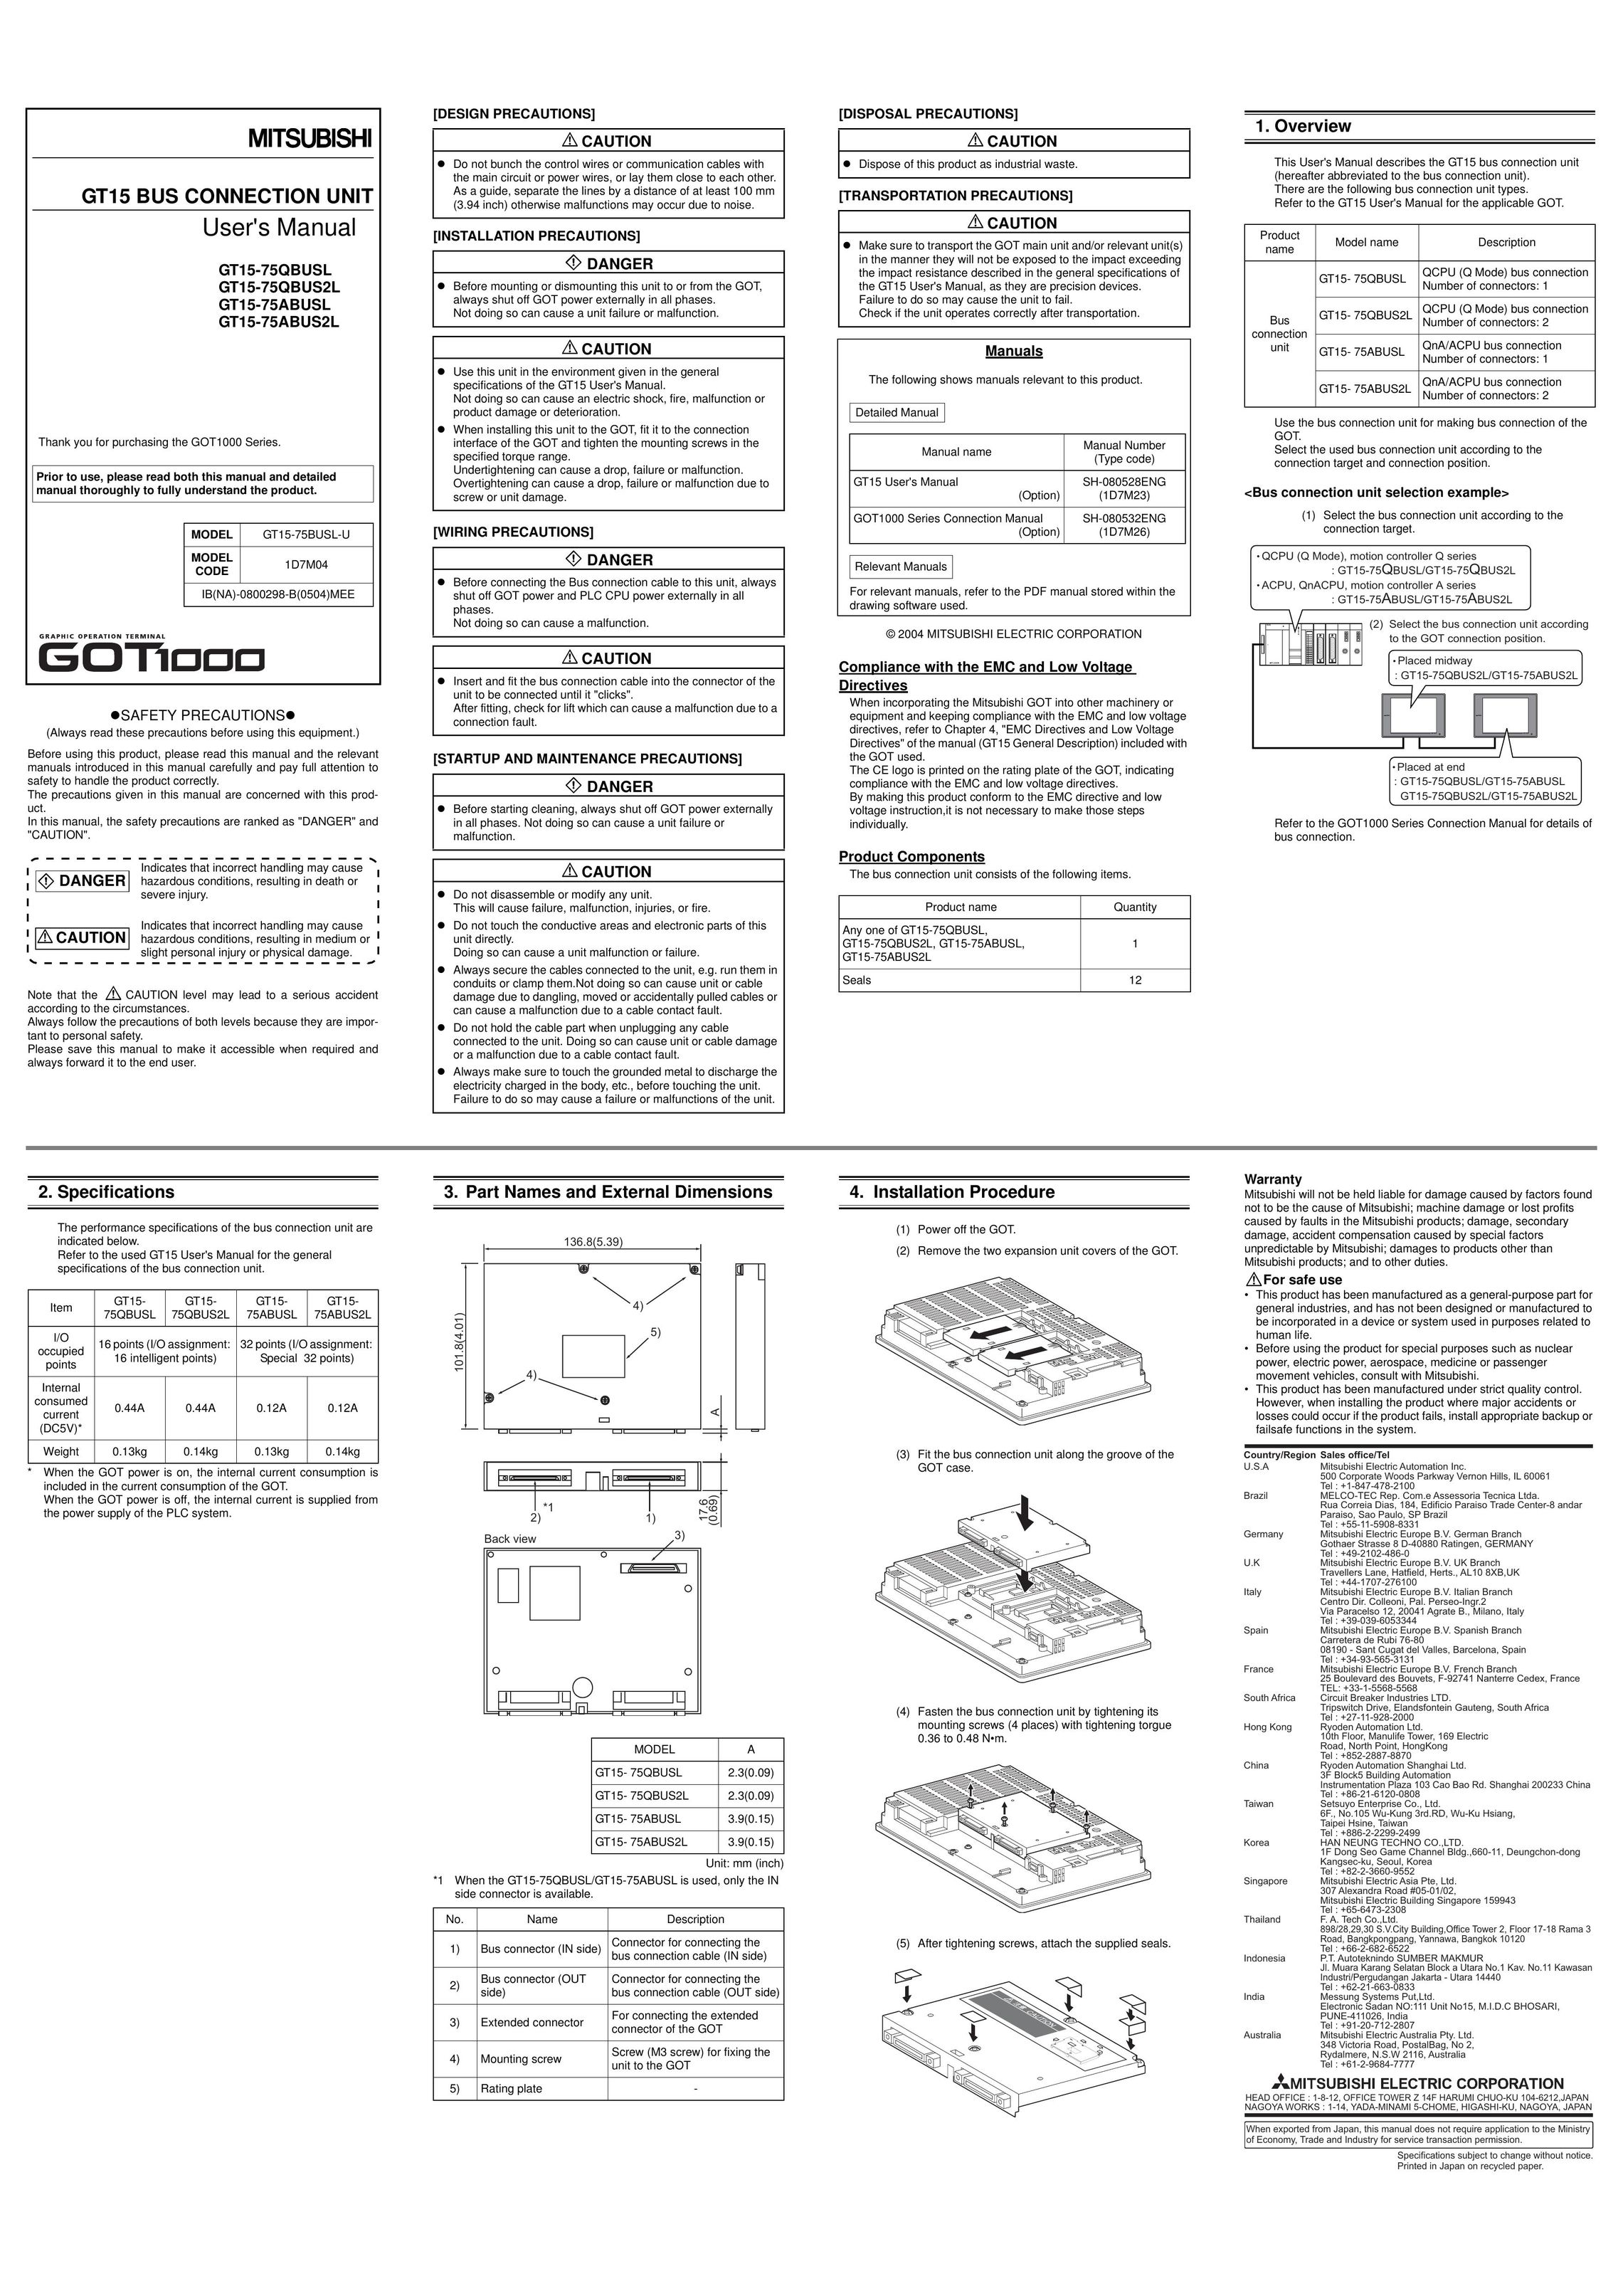 Mitsubishi Electronics GT15-75ABUS2L Computer Hardware User Manual